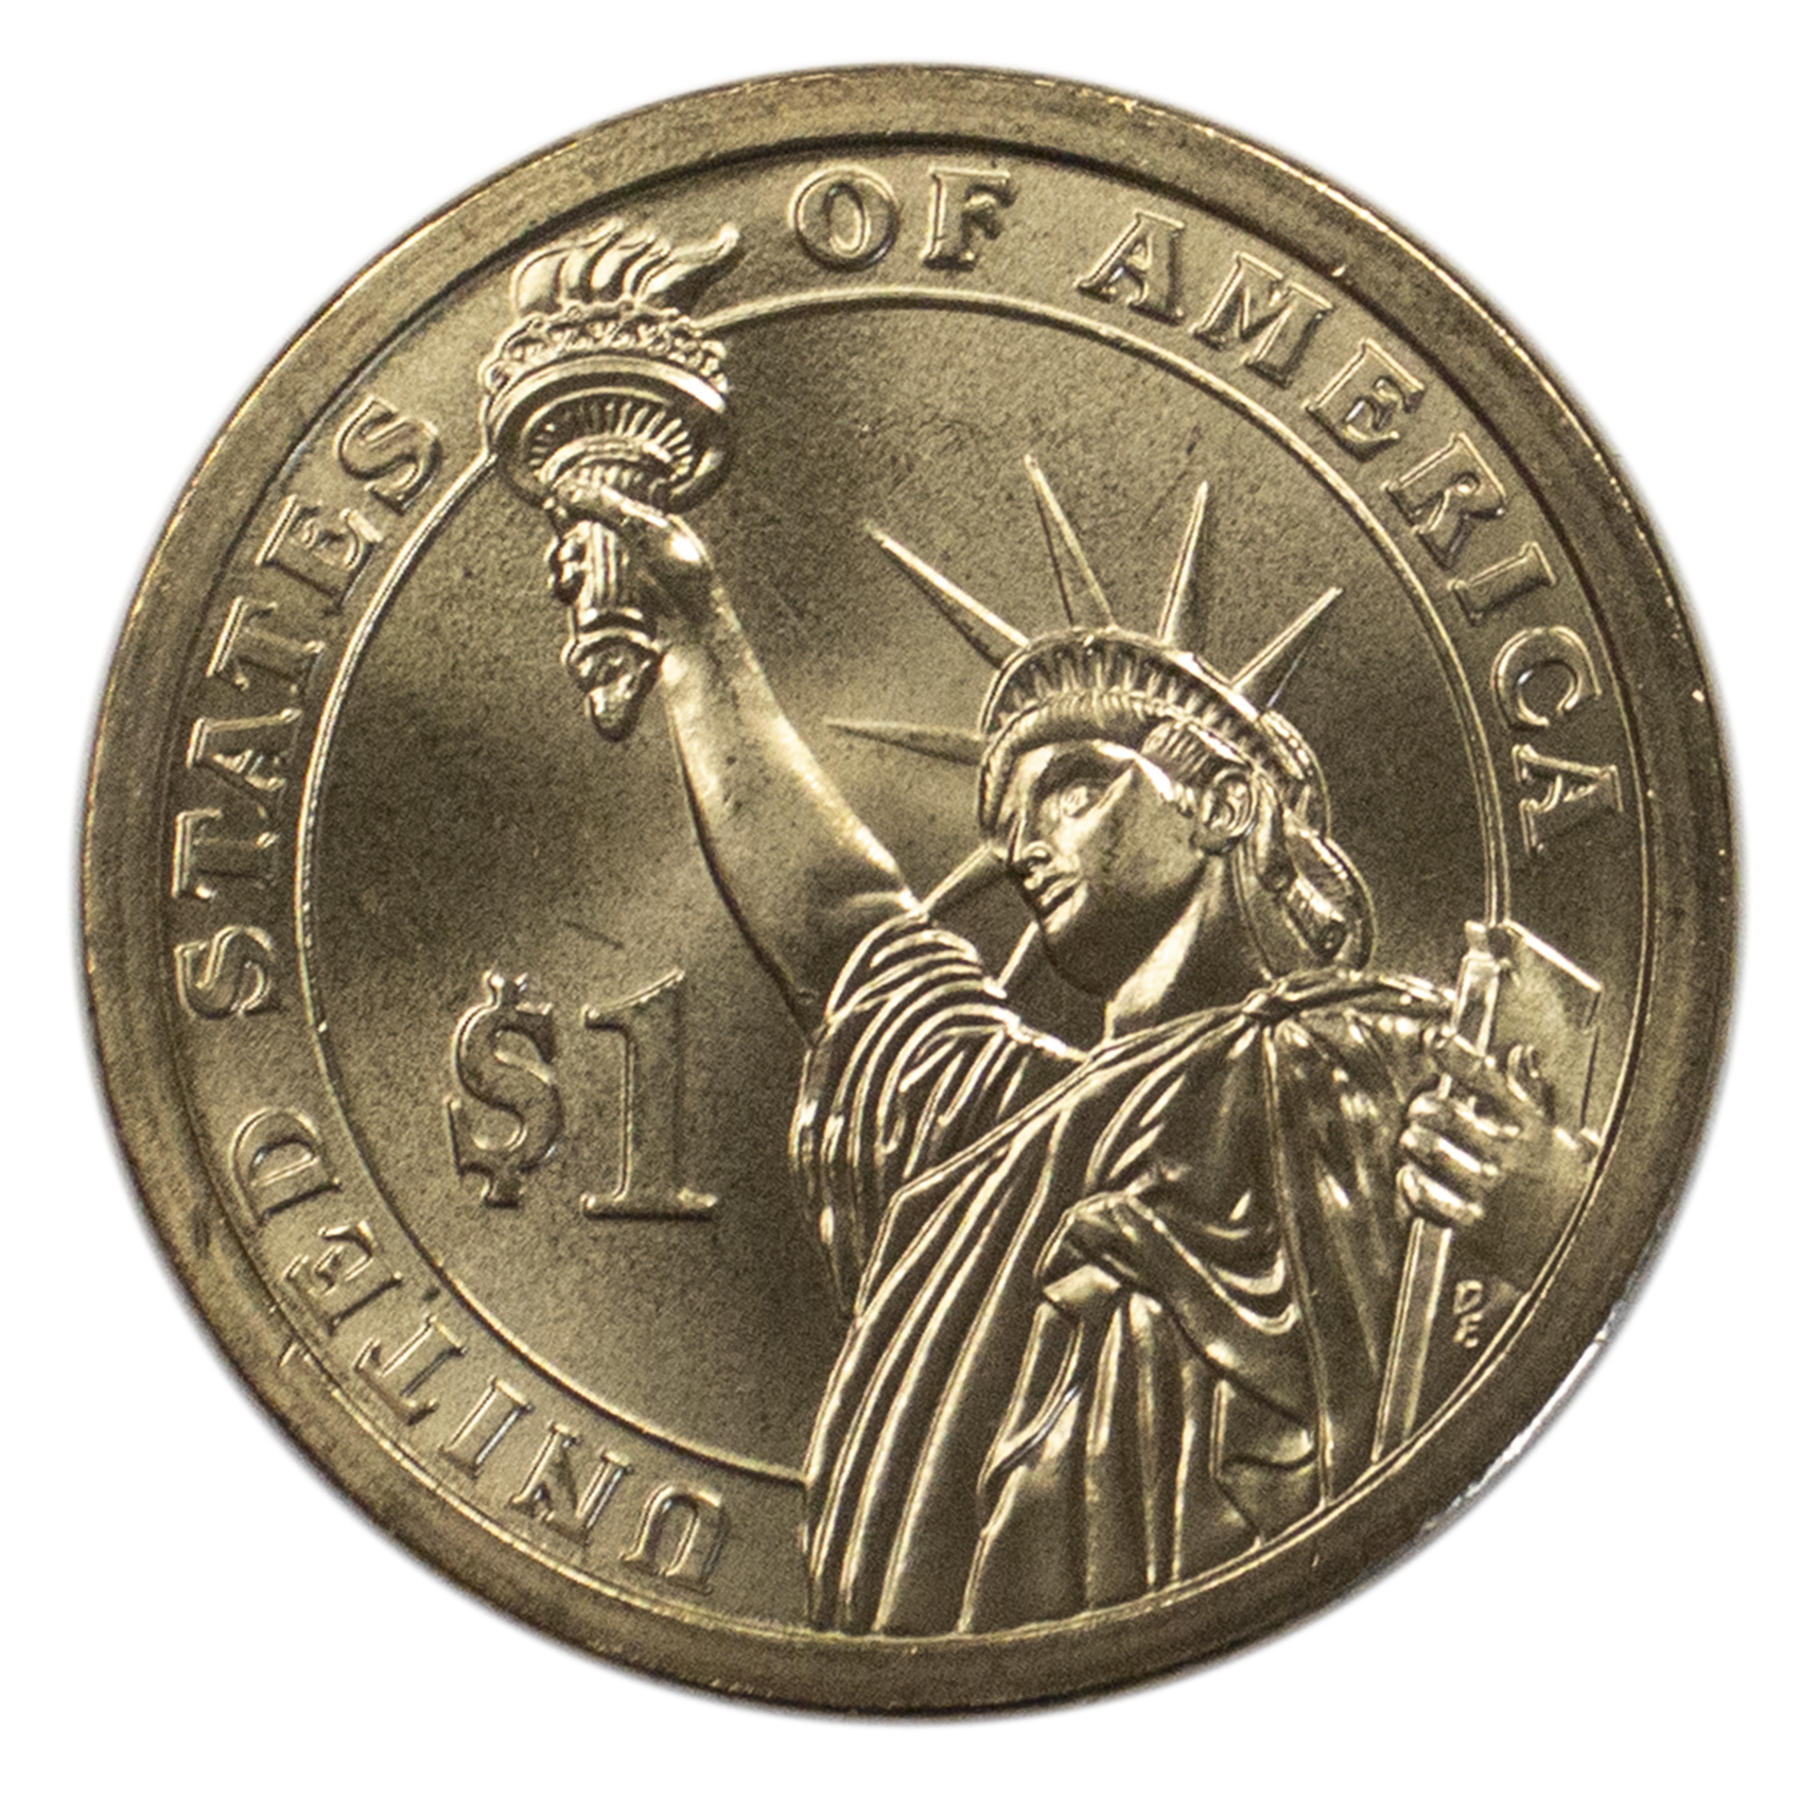 2009 -D John Tyler Presidential Dollar BU Clad US Coin